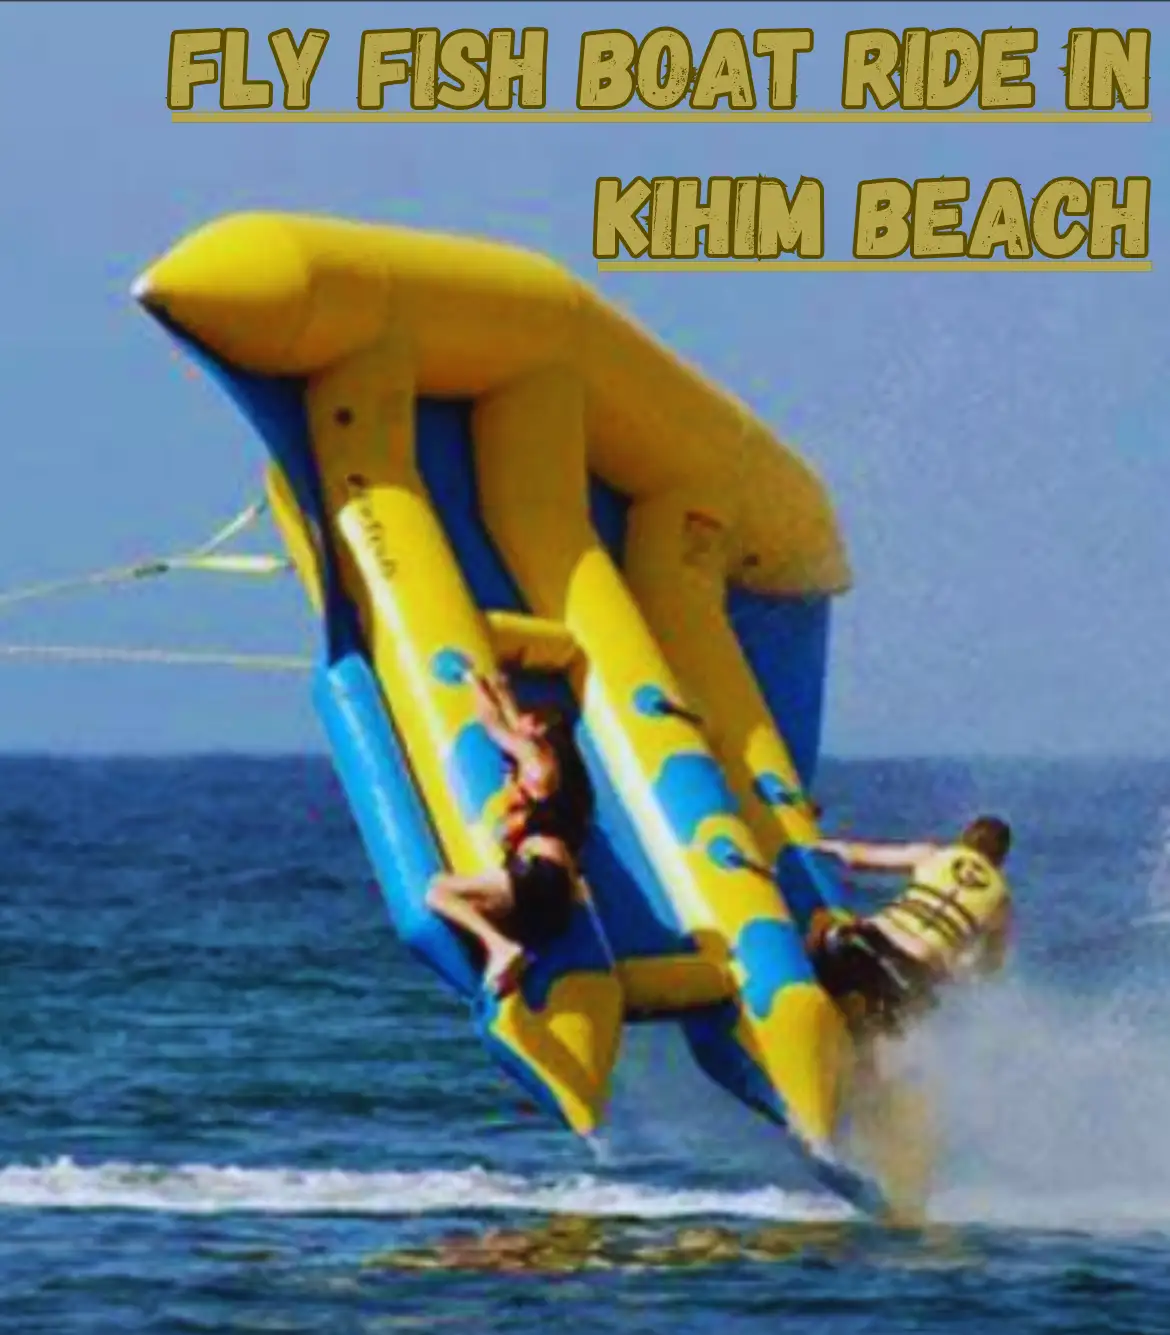 Fly Fish Boat Ride in Kihim Beach